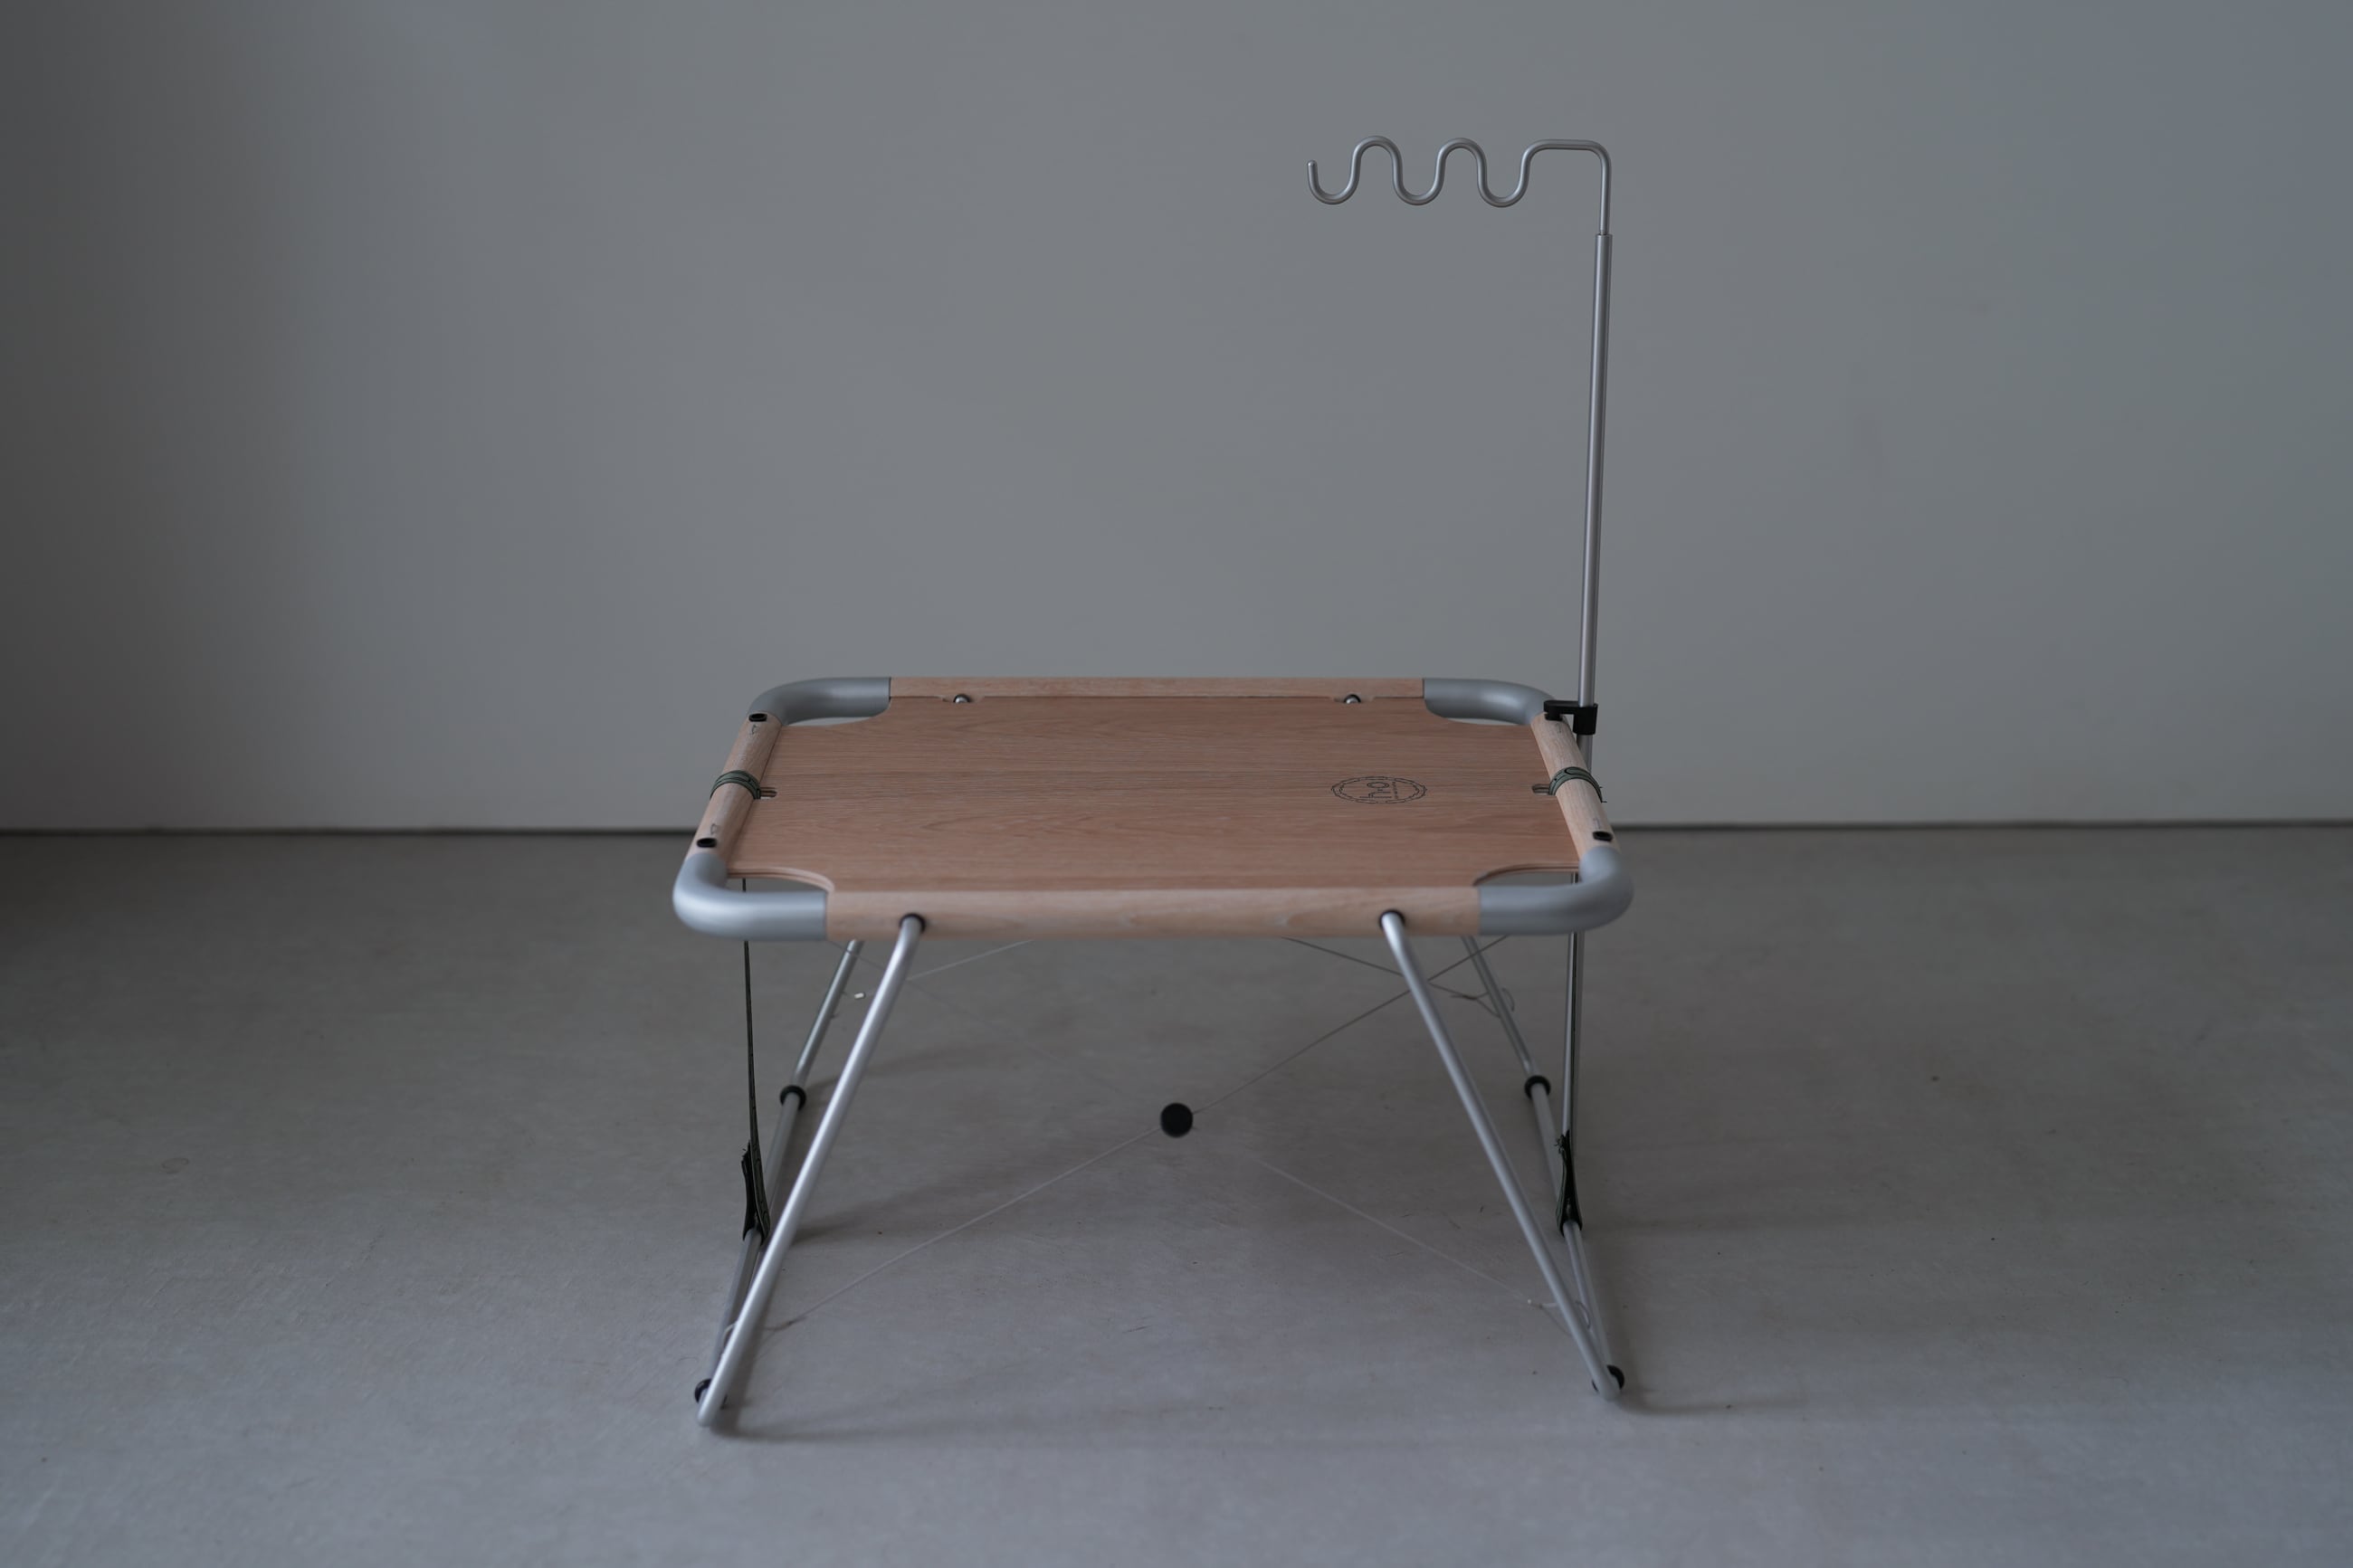 hxo Table Mini White AL. Edition | hxo design jp powered by BASE